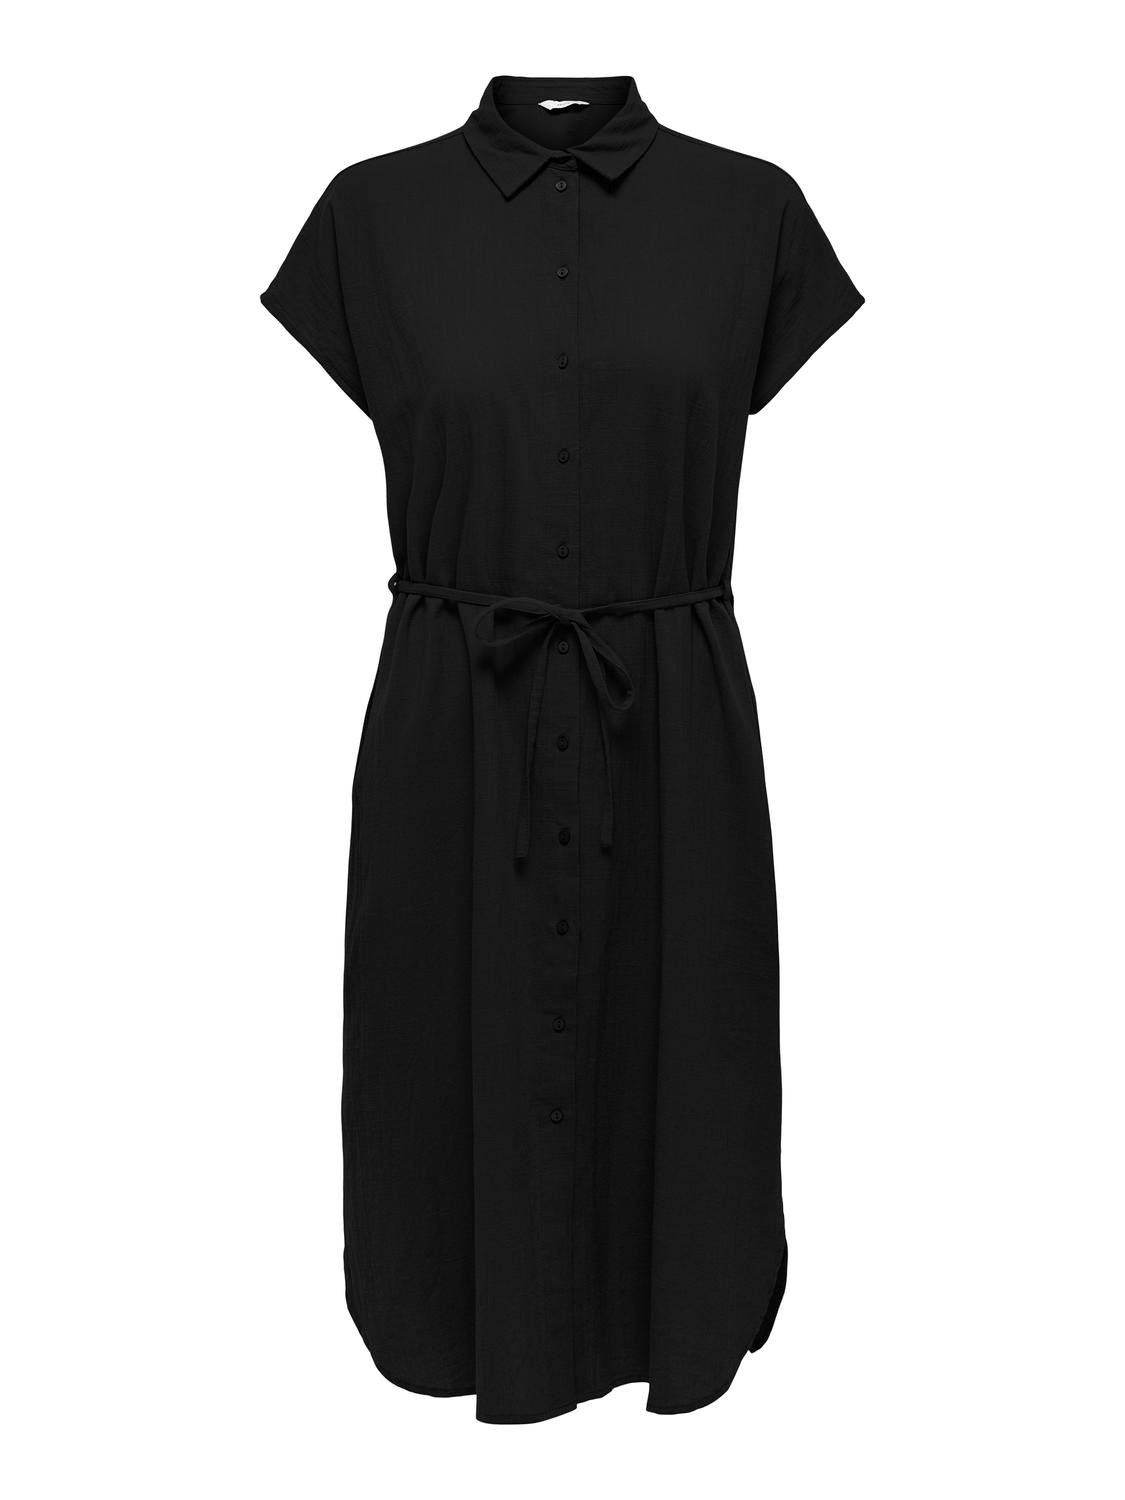 ONLY Midi dress with tie -Black - 15320260